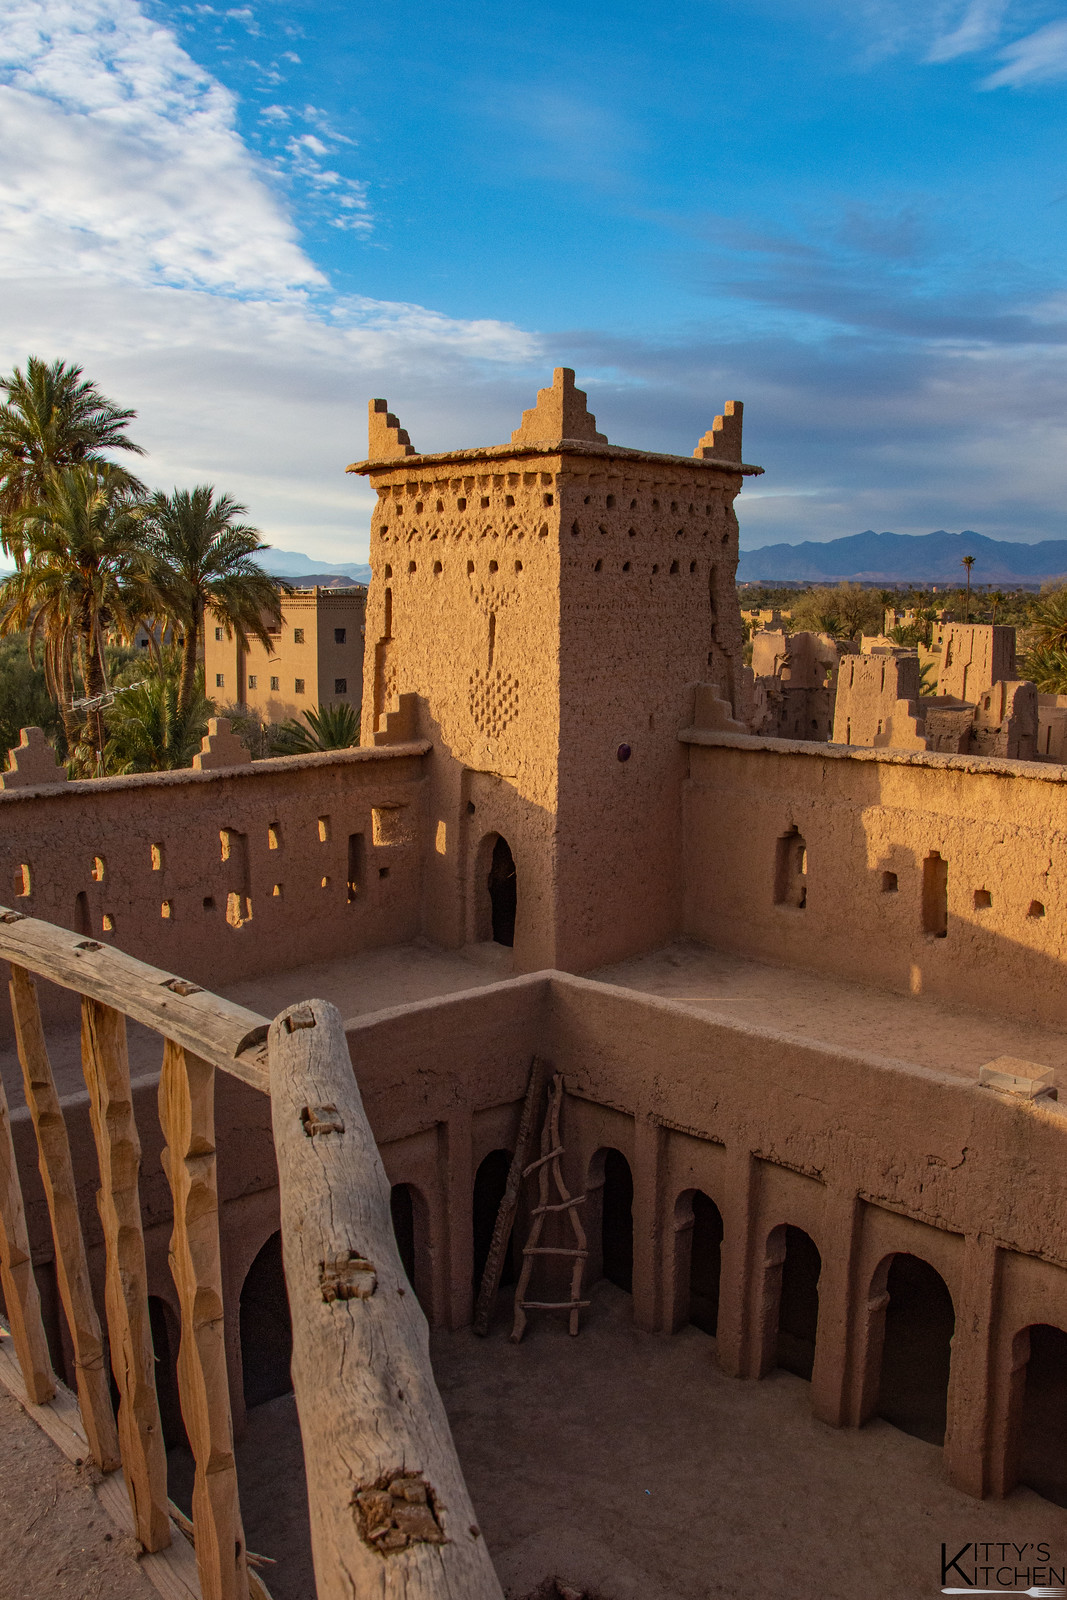 Marocco, Maroc, maroccan, kasba, architettura, kasbash, viaggi, travel maroc, marocco on tour